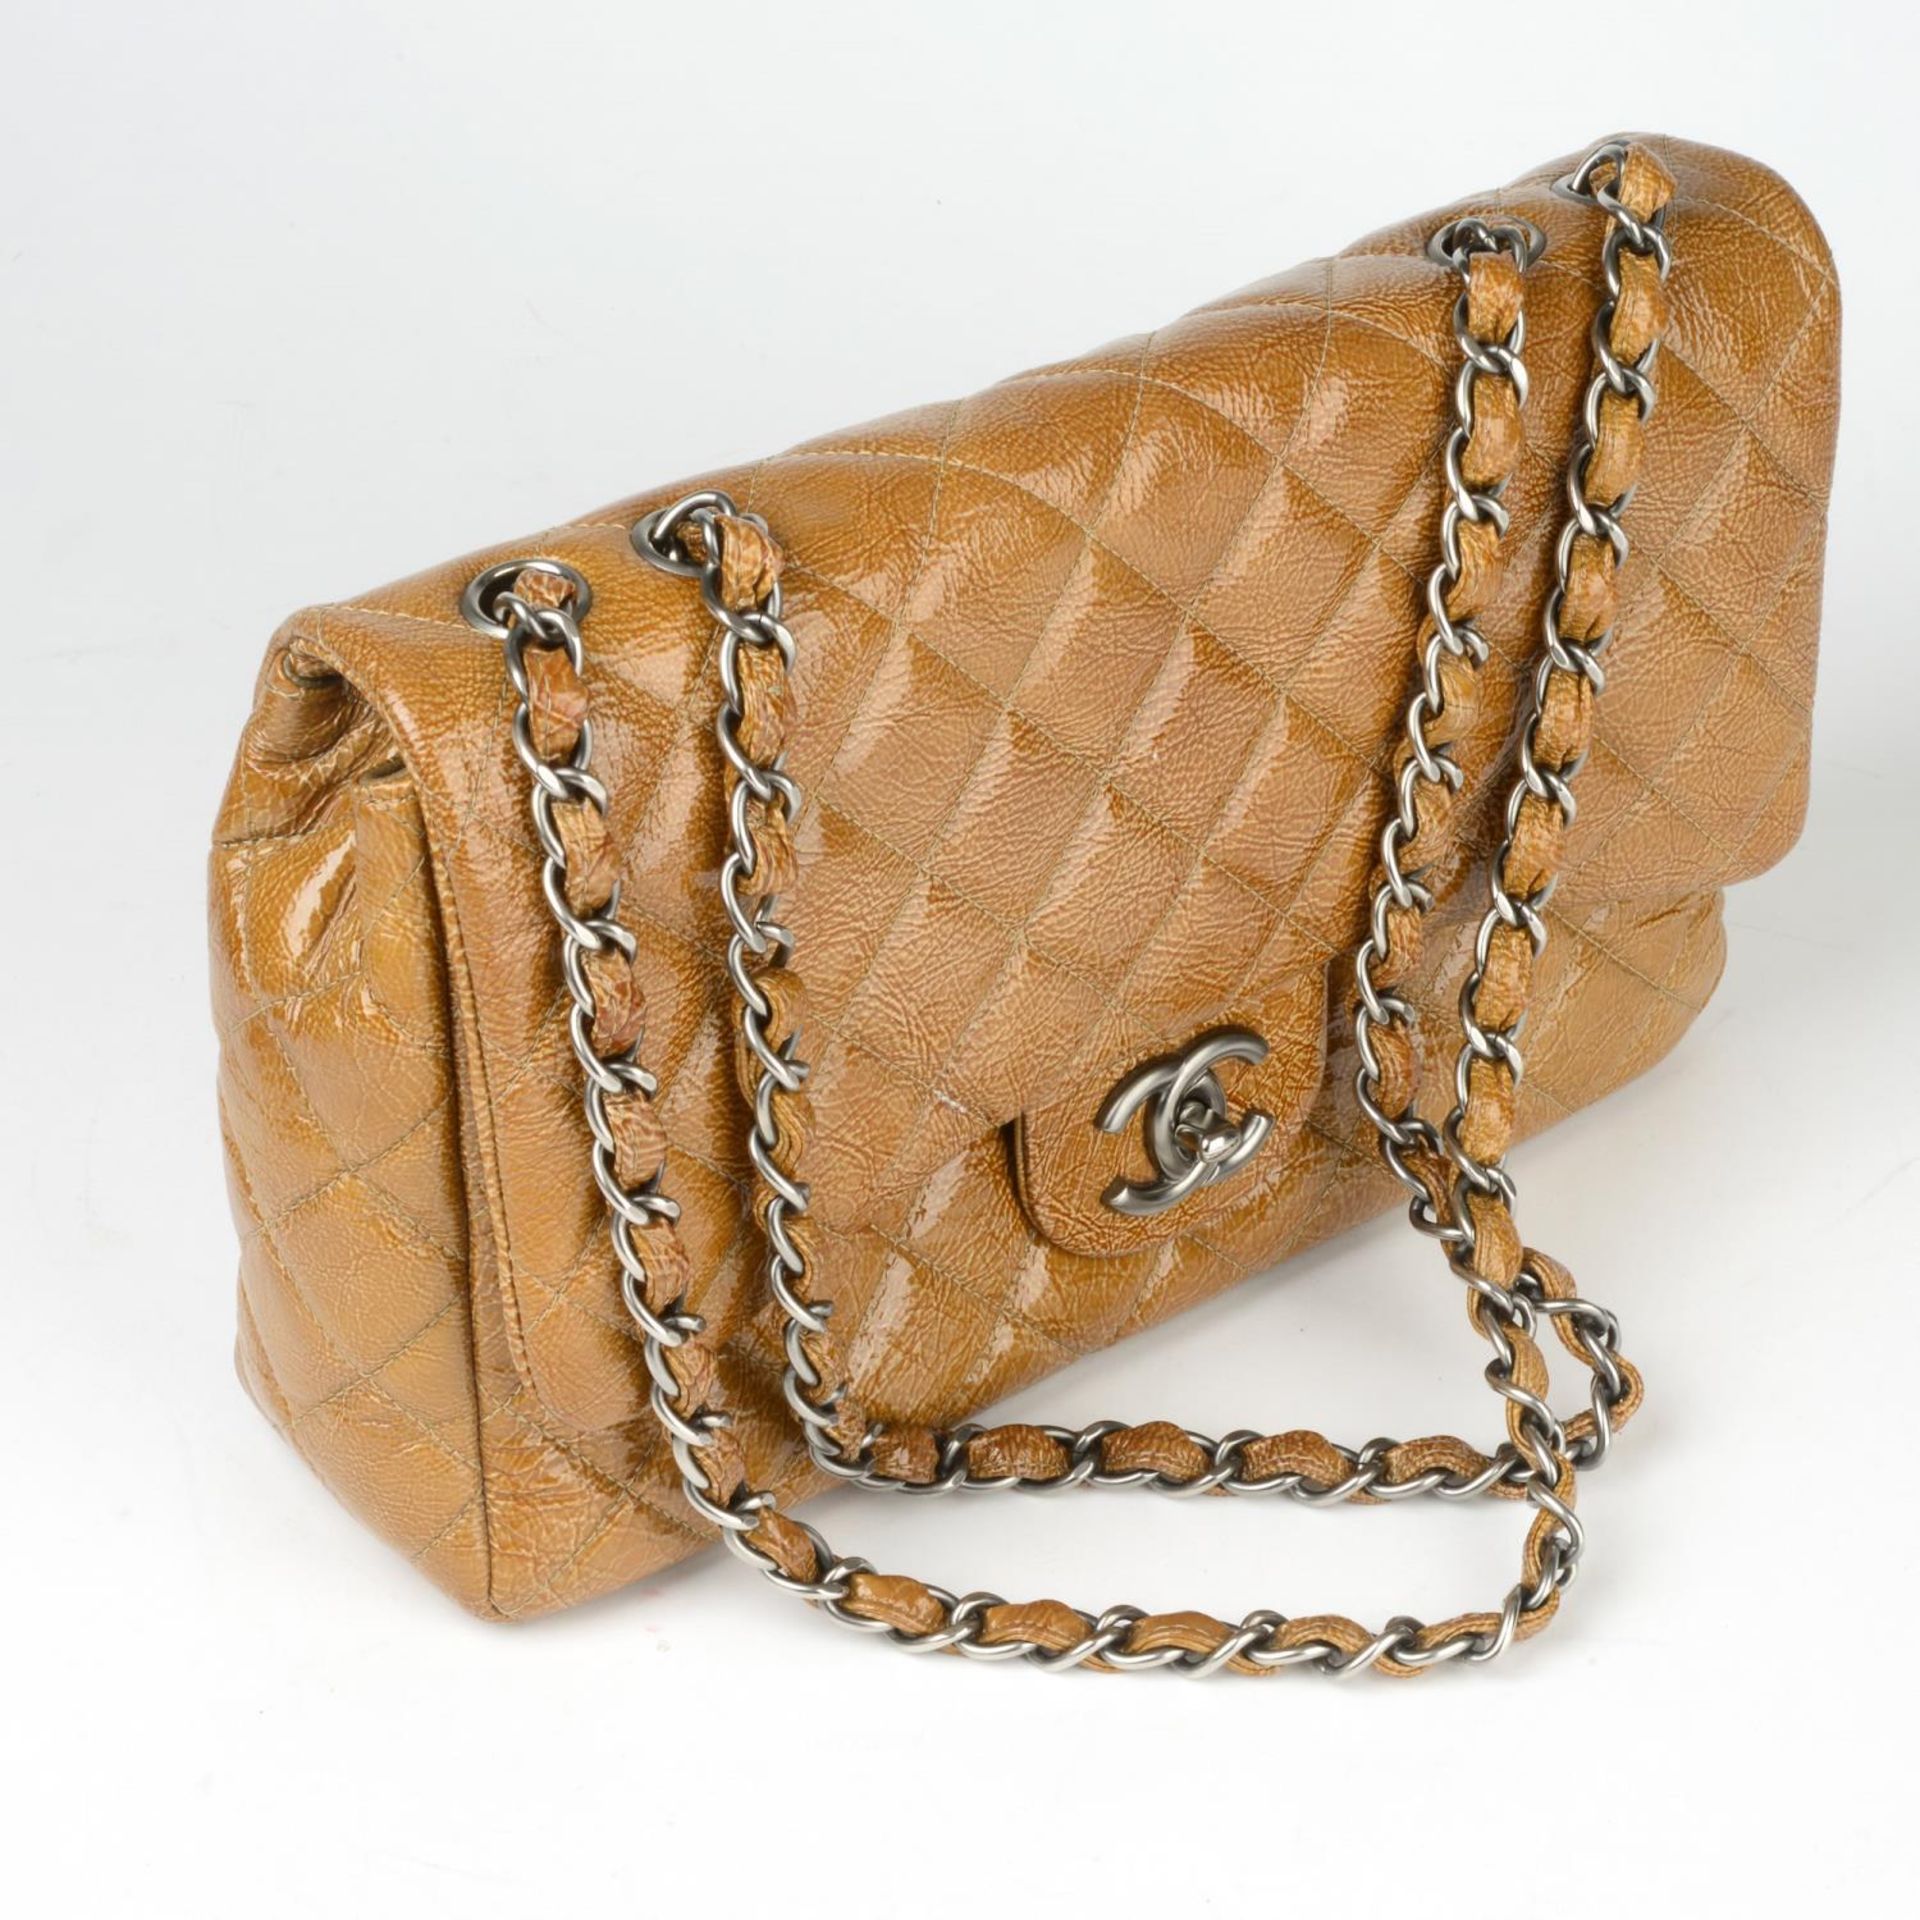 CHANEL - a crinkled patent leather Single Flap handbag. - Bild 2 aus 4